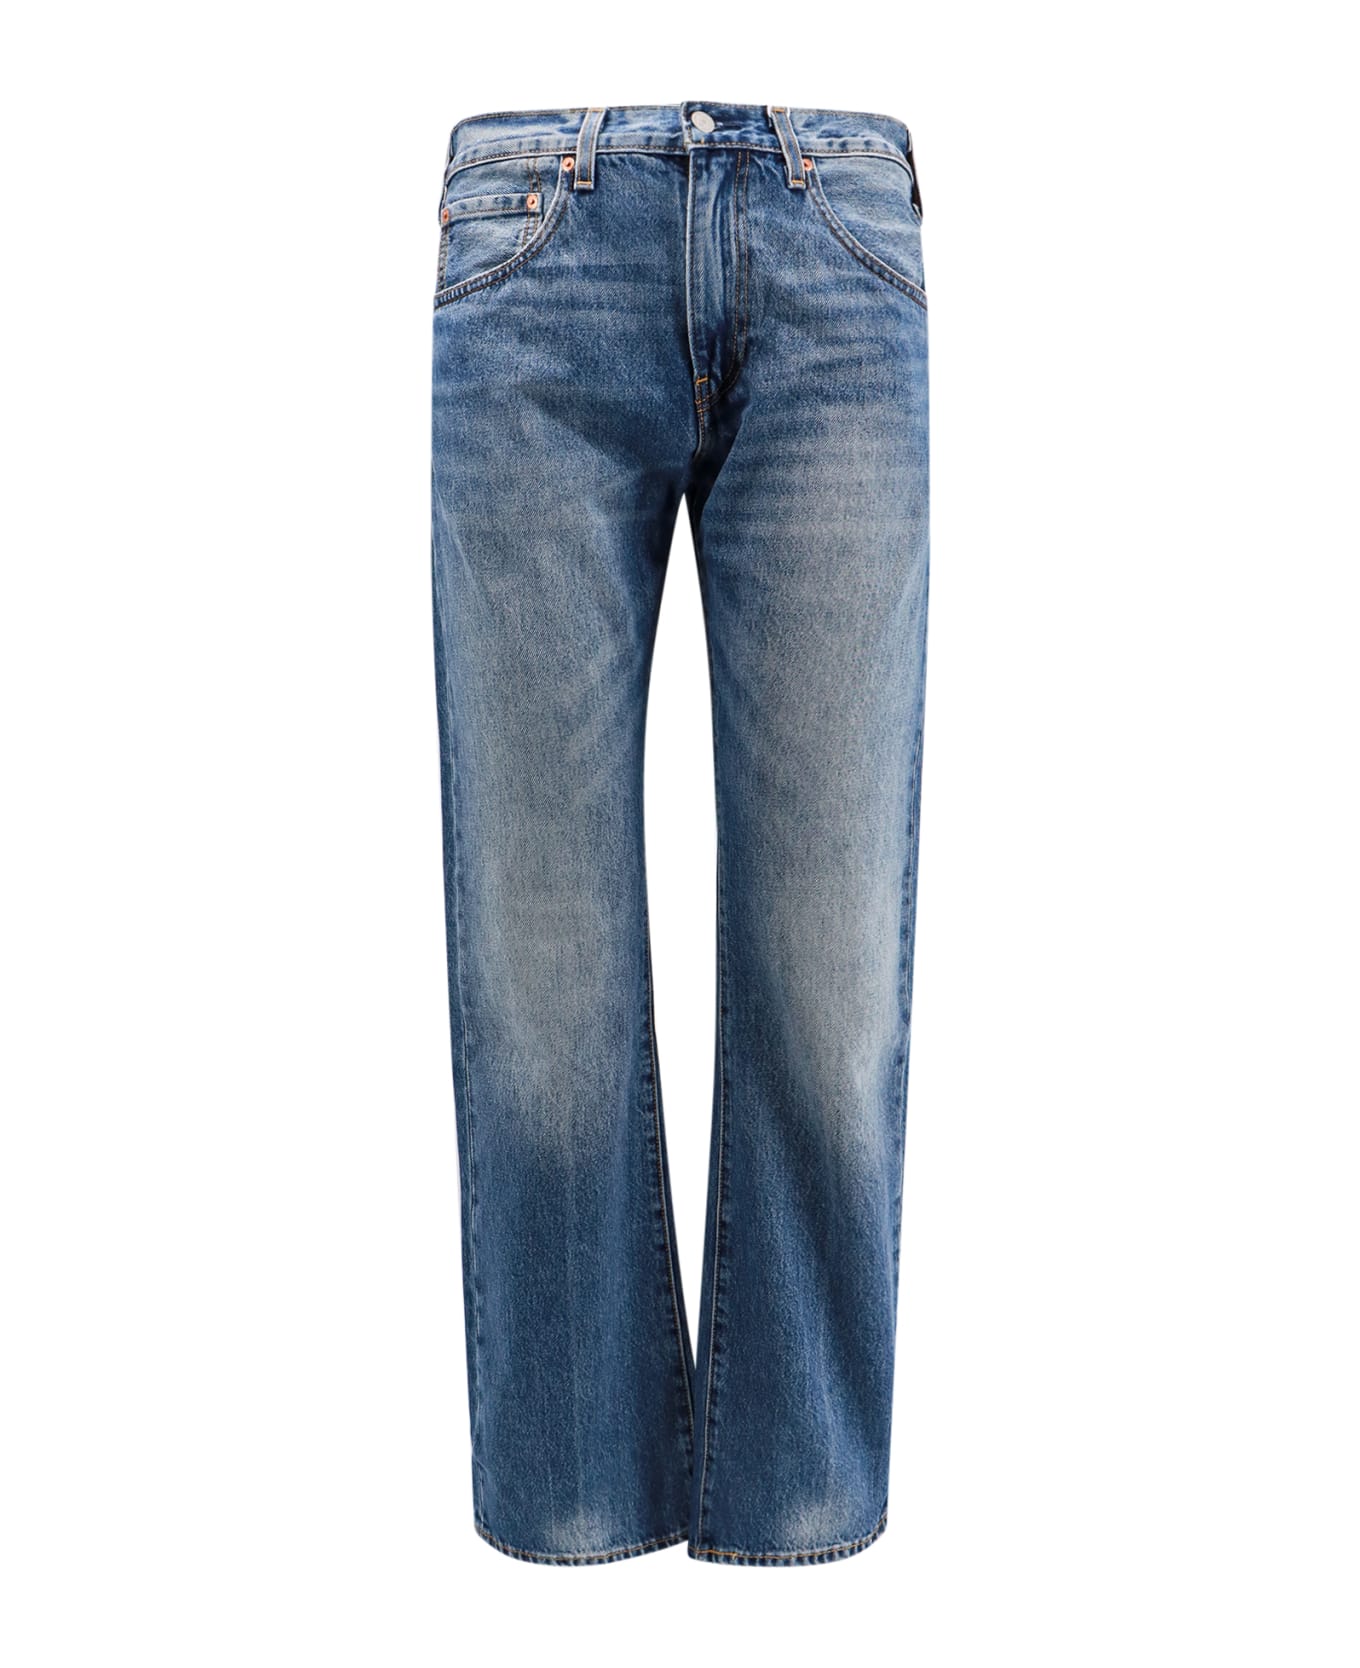 Levi's 517 Bootcut Jeans - Blue デニム